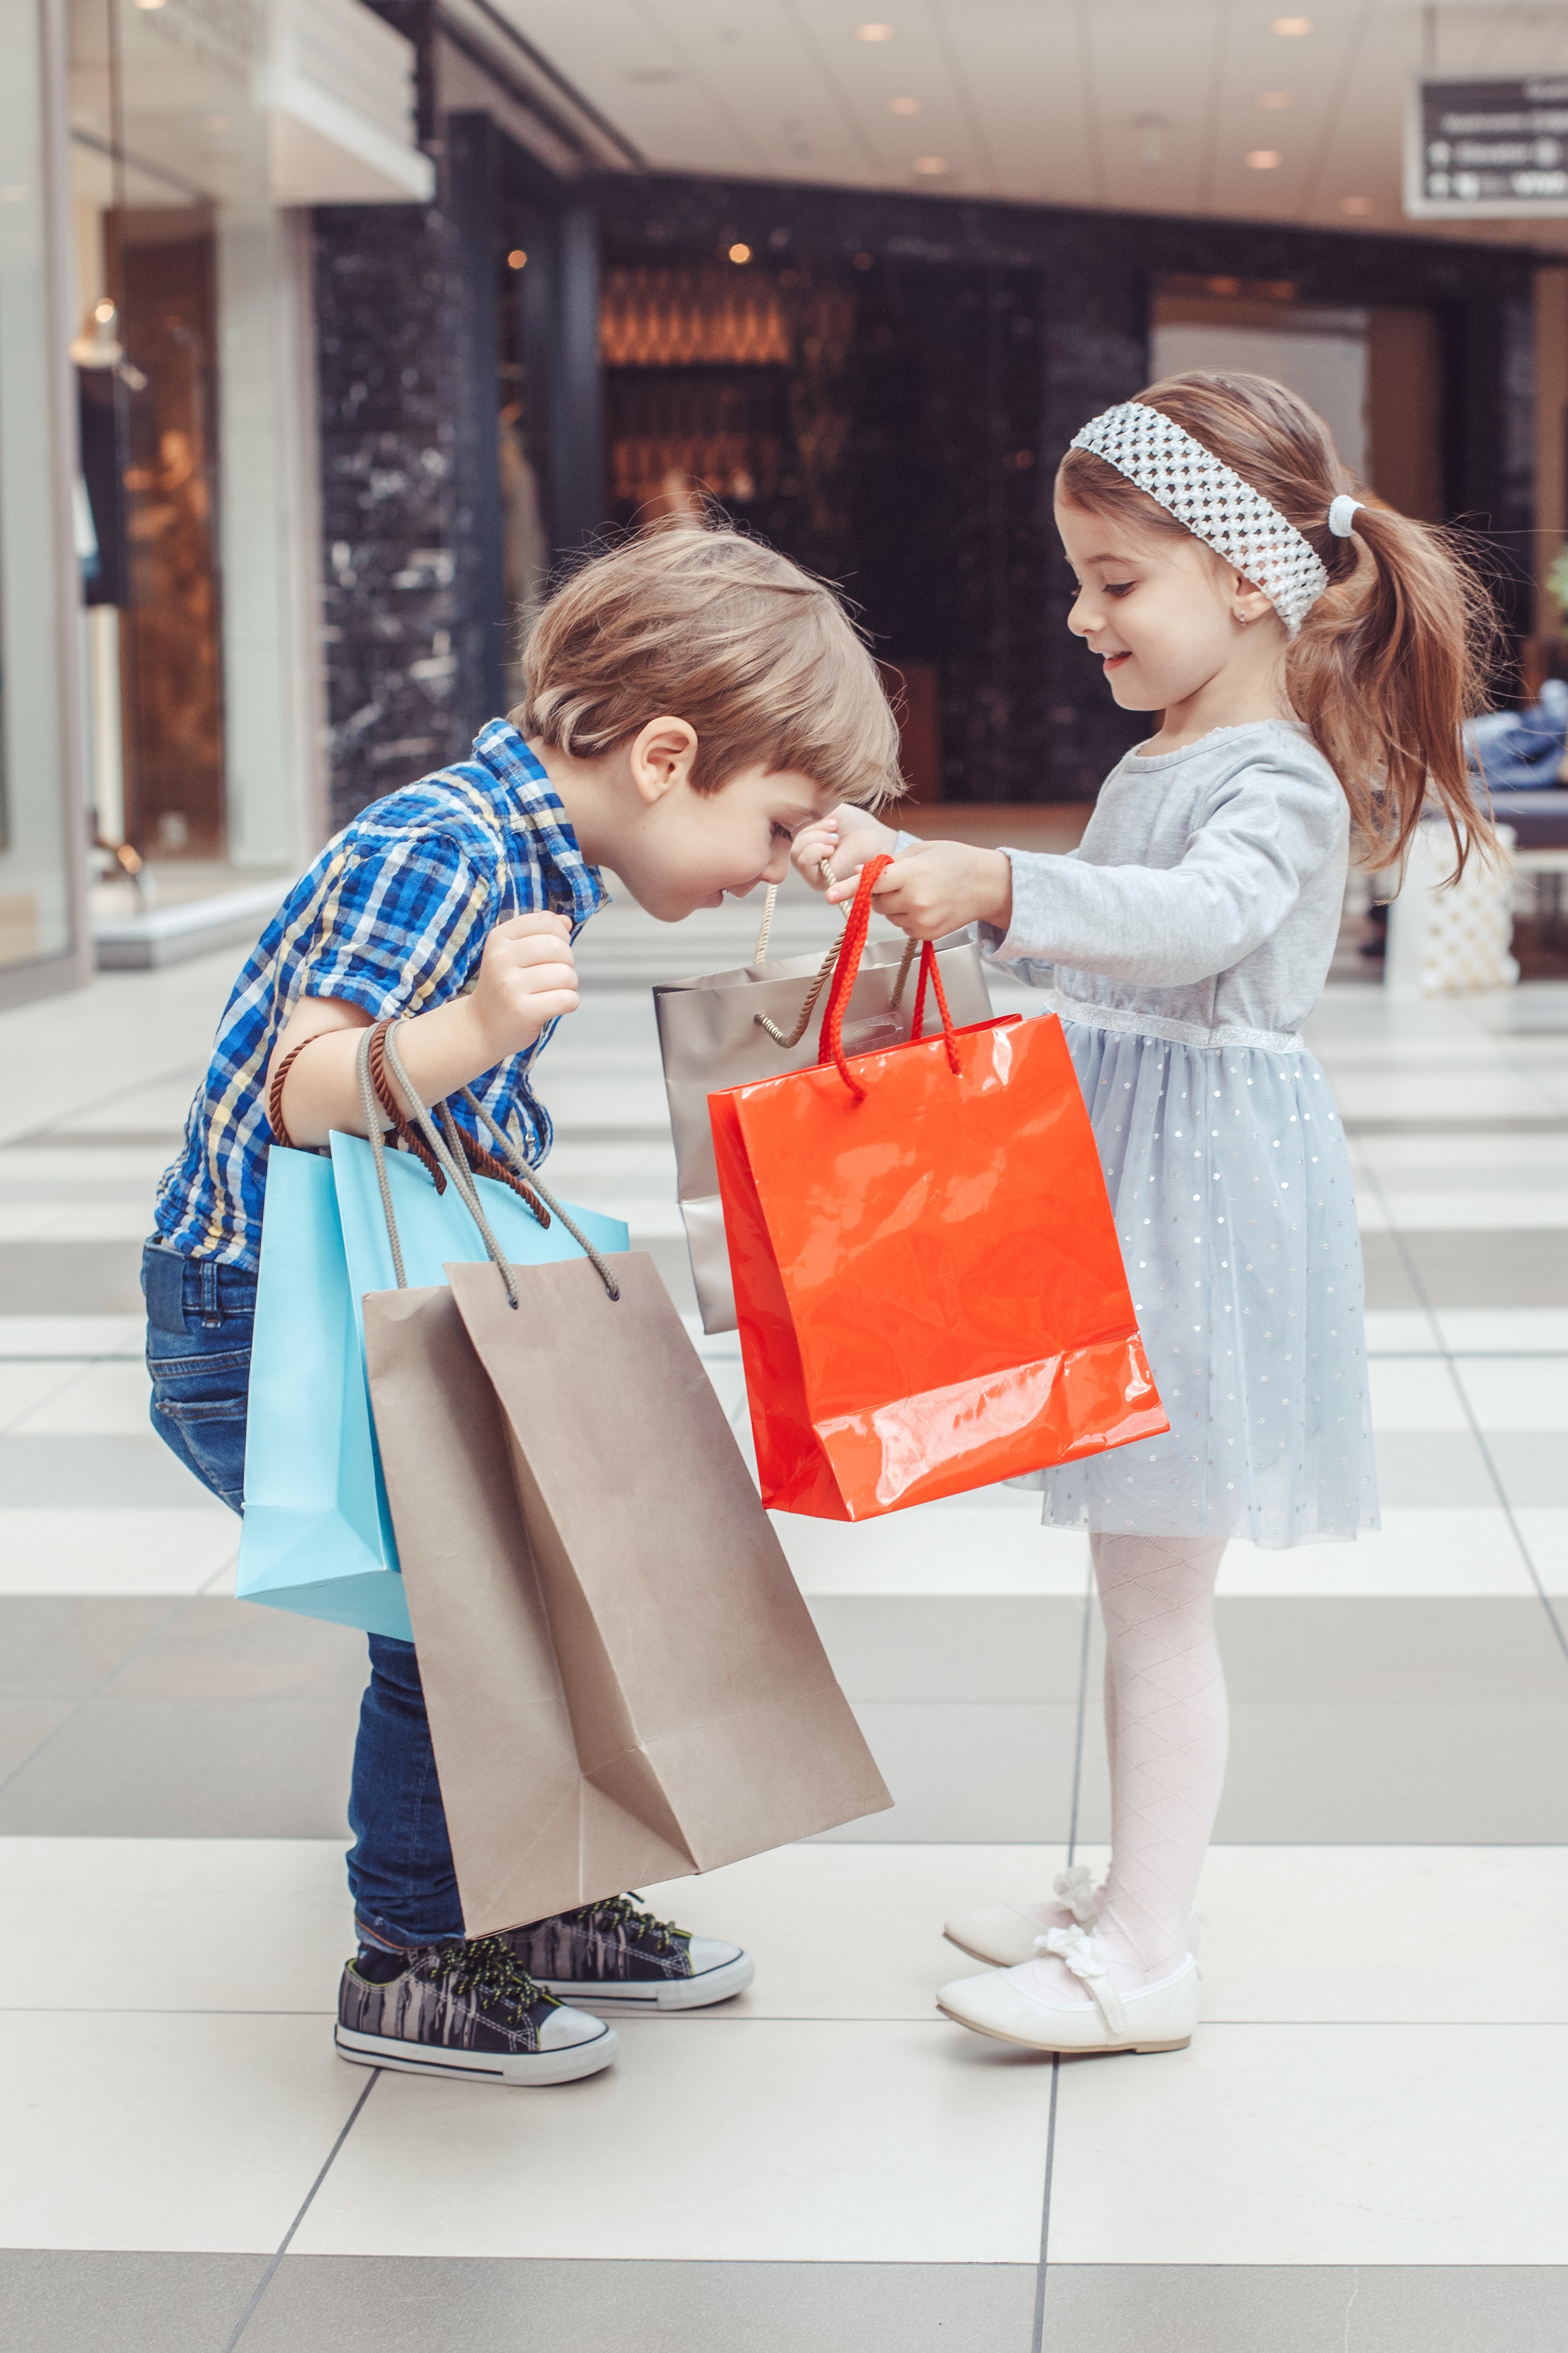 They go shopping days go. Дети шоппинг. Детский шоппинг. Шоппинг дети для детей. Детский шоппинг с мамой.